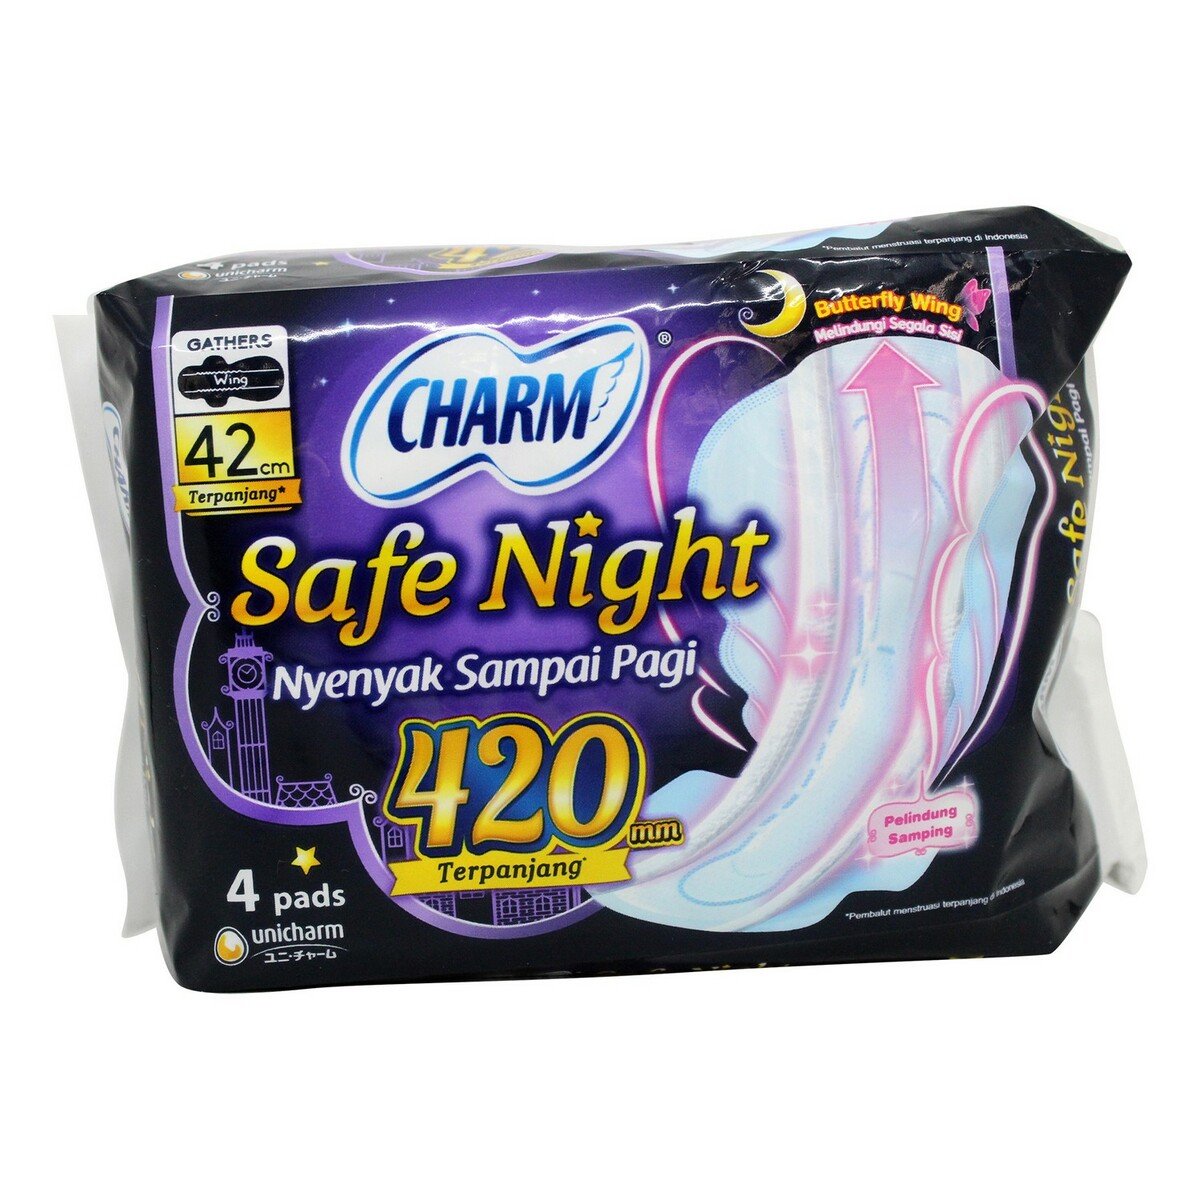 Charm Bodyfit Night Ultra Slim Wing 42cm 4pcs